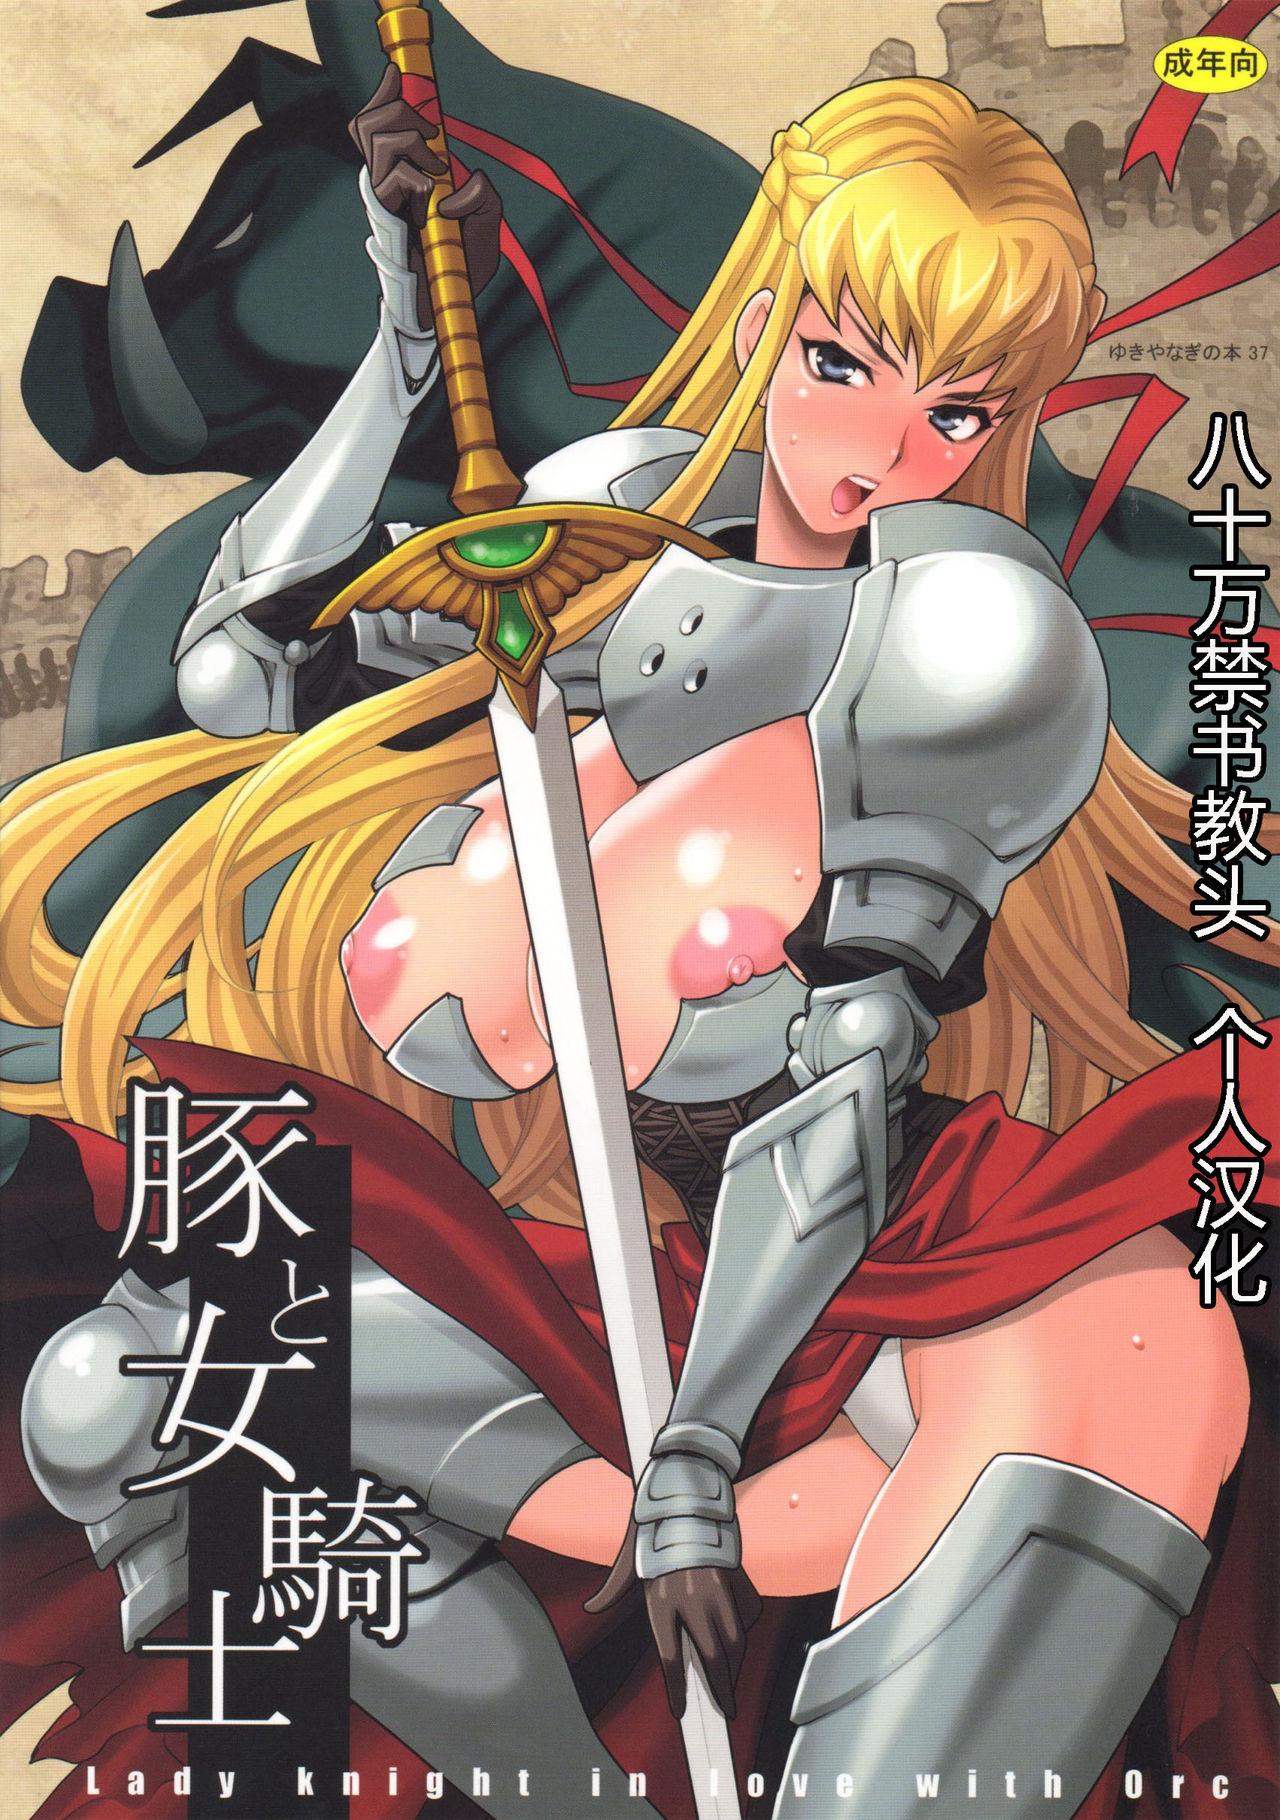 Yukiyanagi no Hon 37 Buta to Onnakishi - Lady knight in love with Orc 0